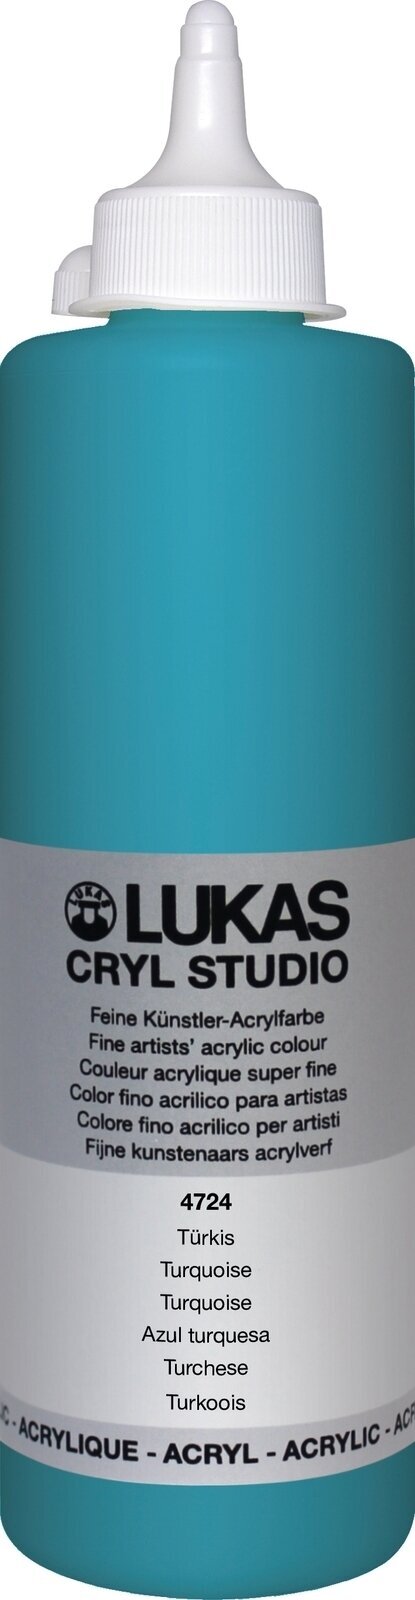 Peinture acrylique Lukas Cryl Studio Peinture acrylique 500 ml Turquoise